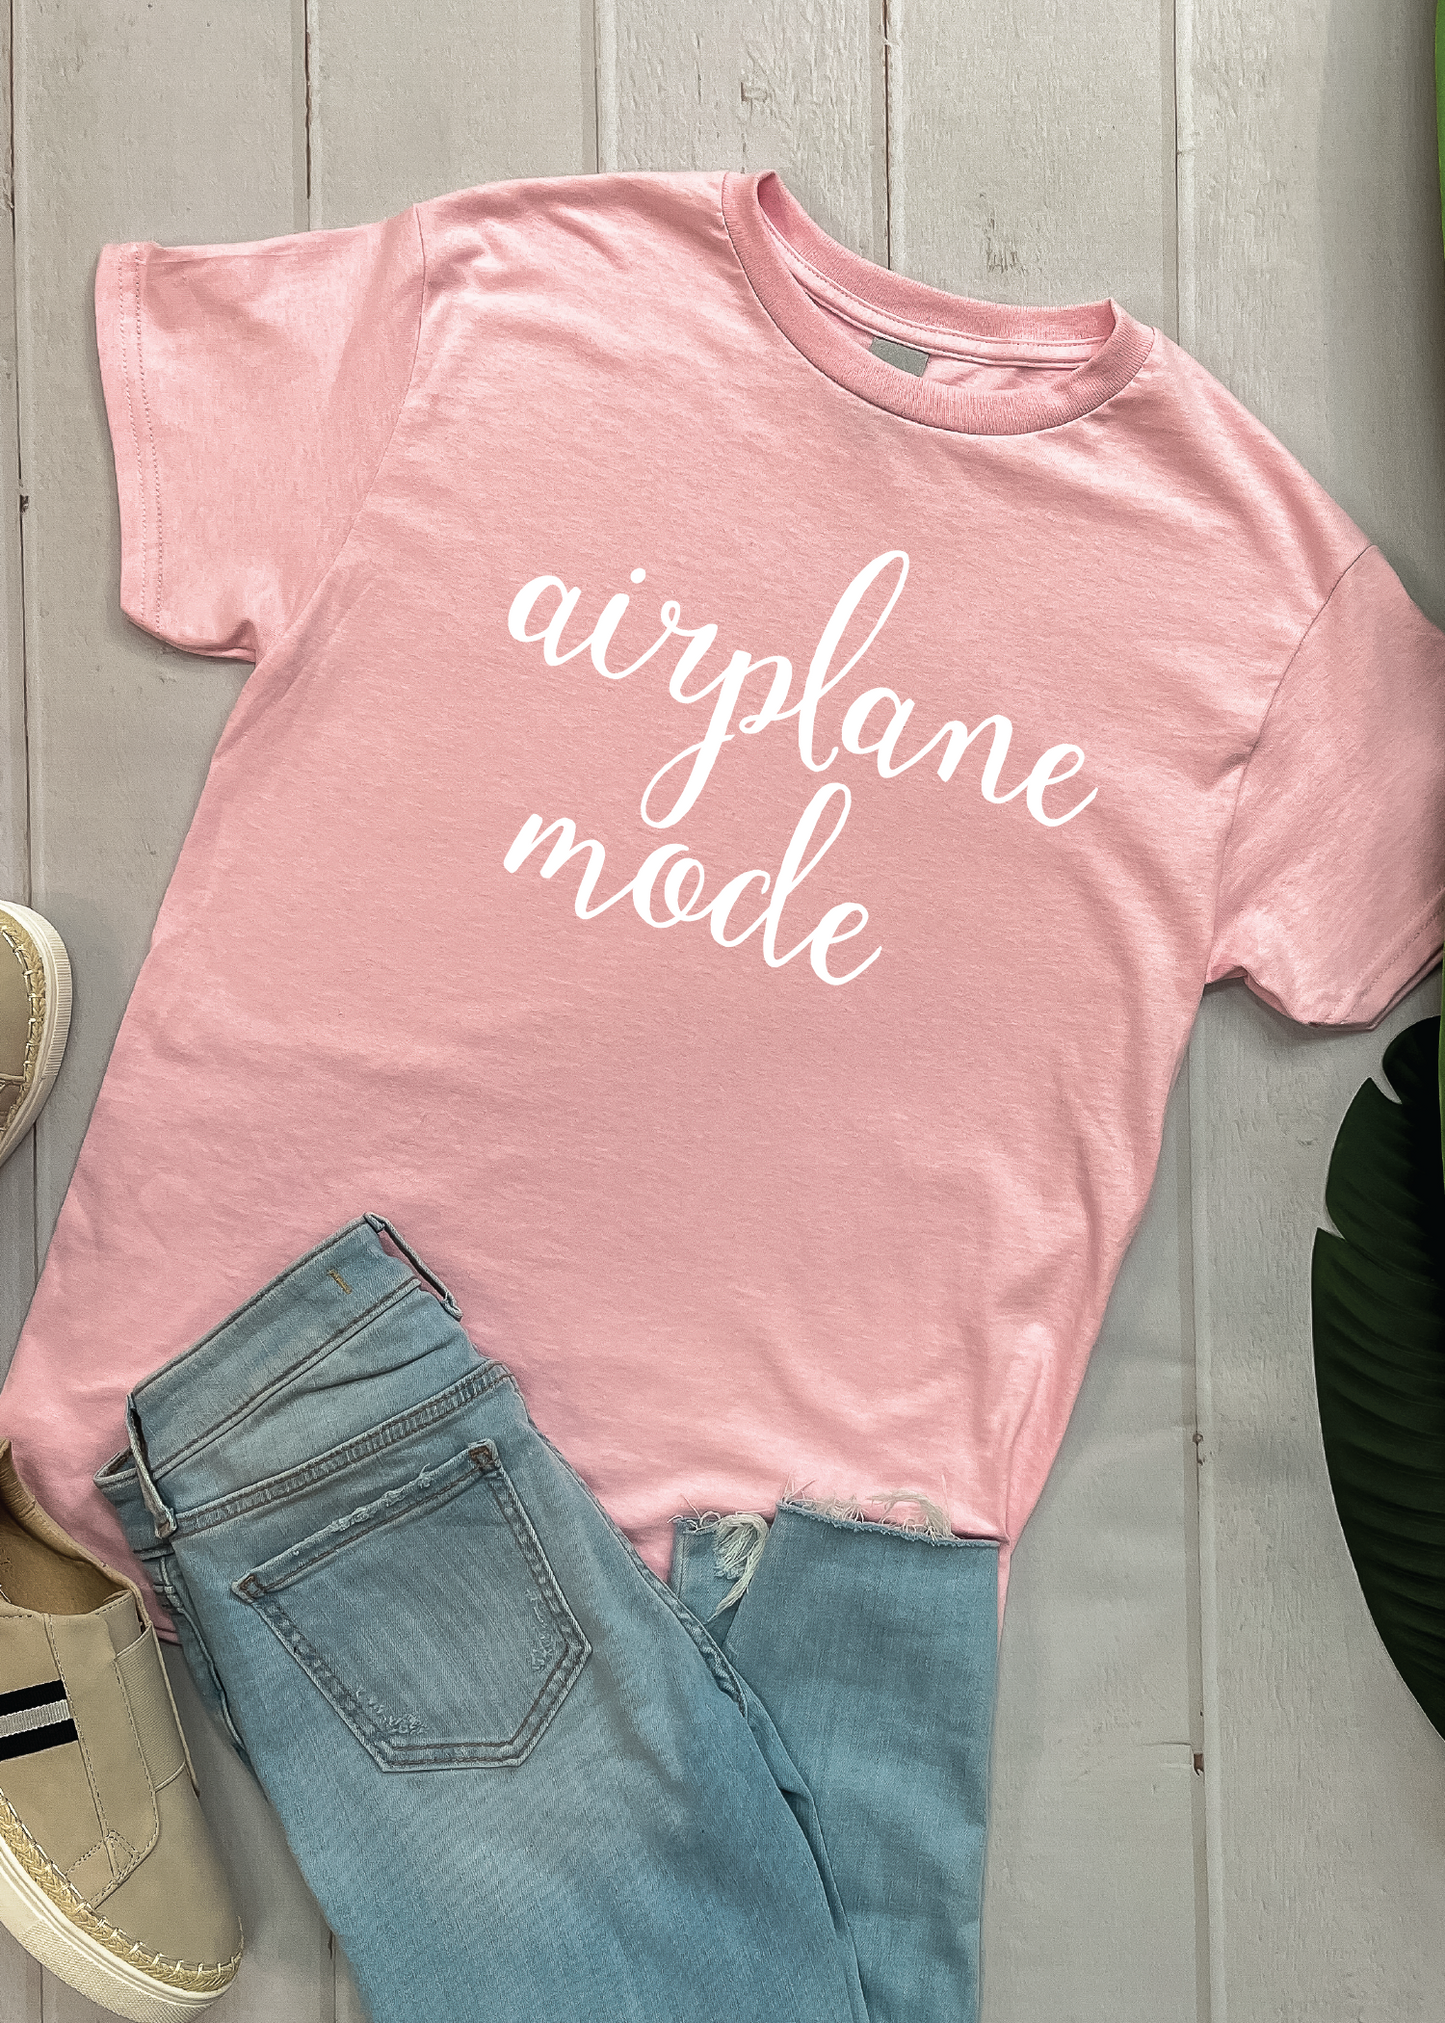 Airplane Mode - Graphic Tee